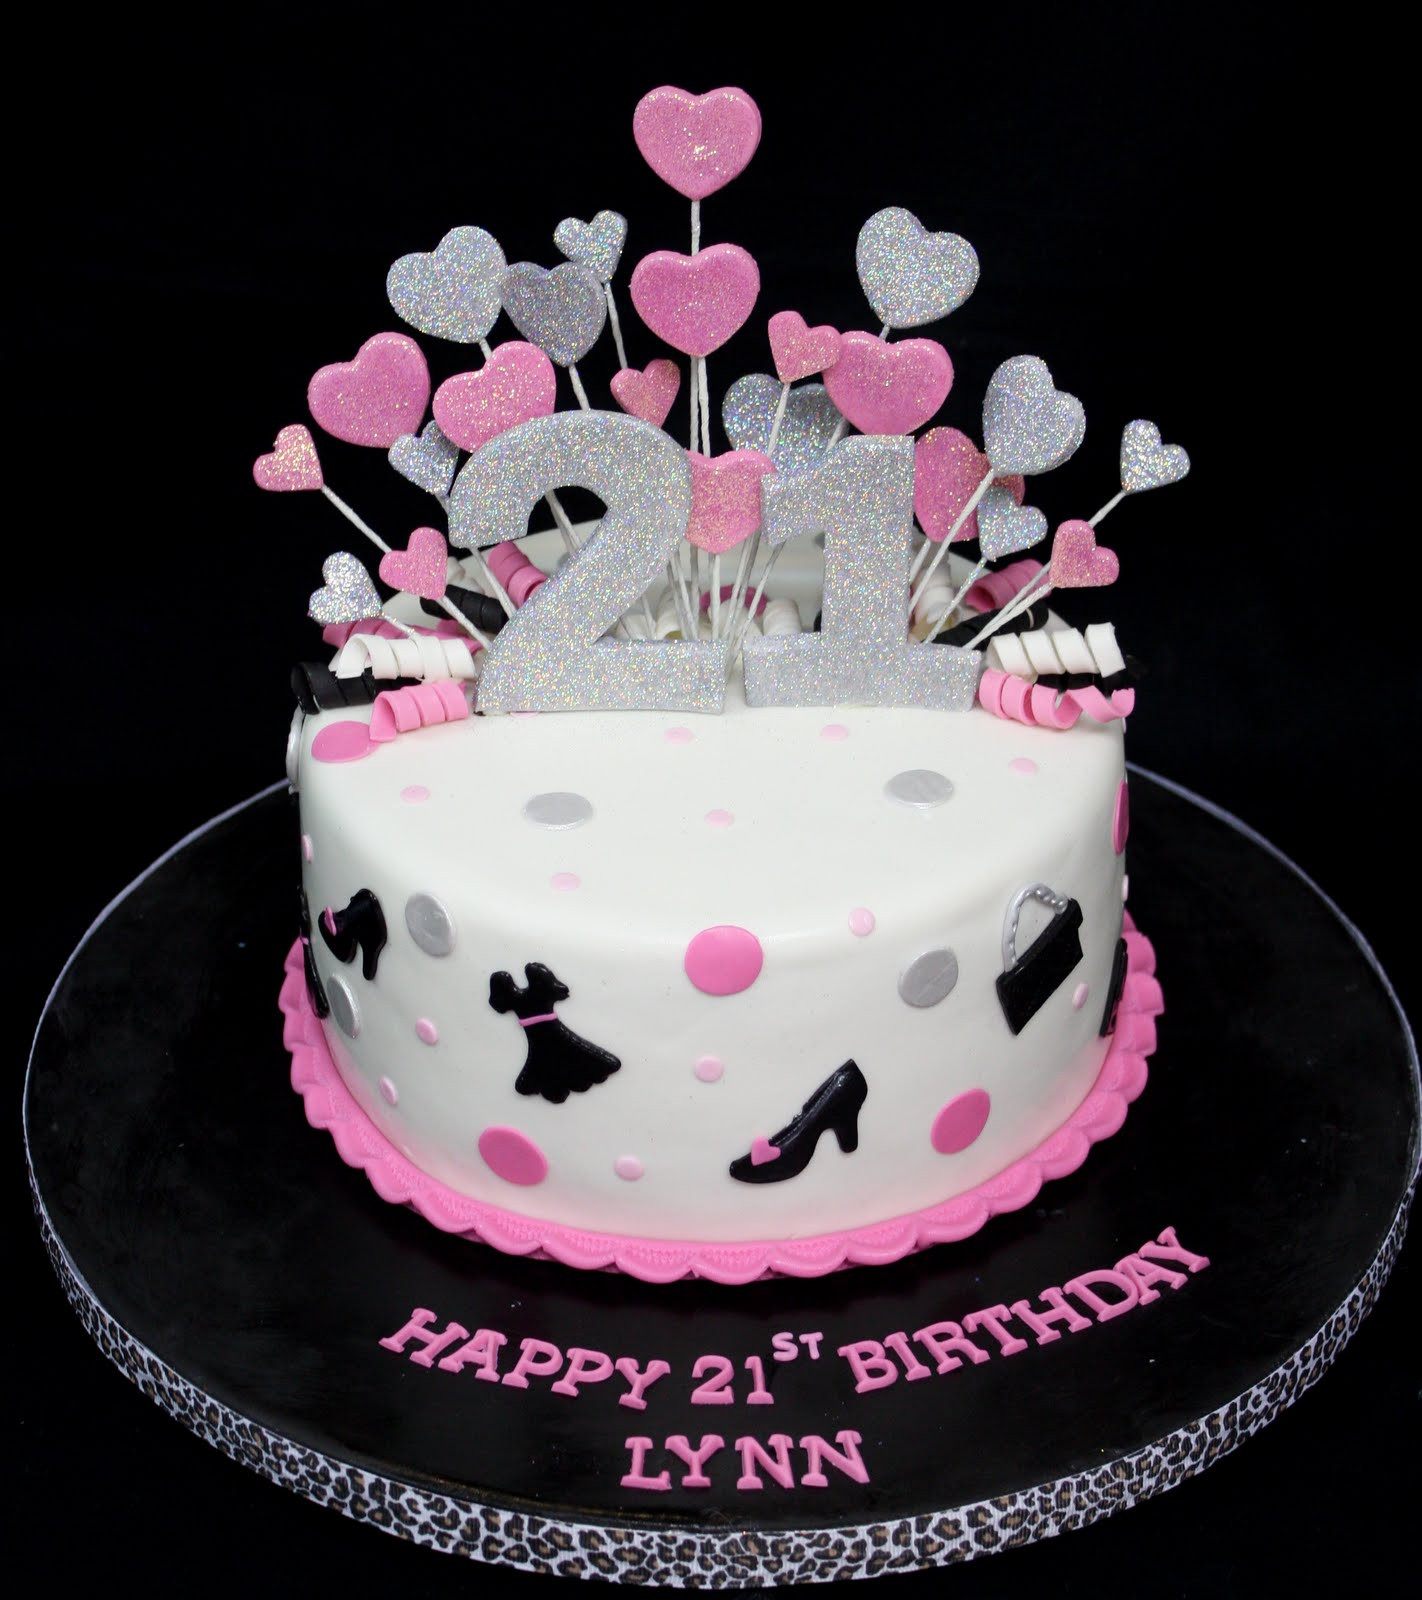 Best ideas about 21 Birthday Cake
. Save or Pin plete Deelite Fashion Glitter 21st Birthday Cake Now.